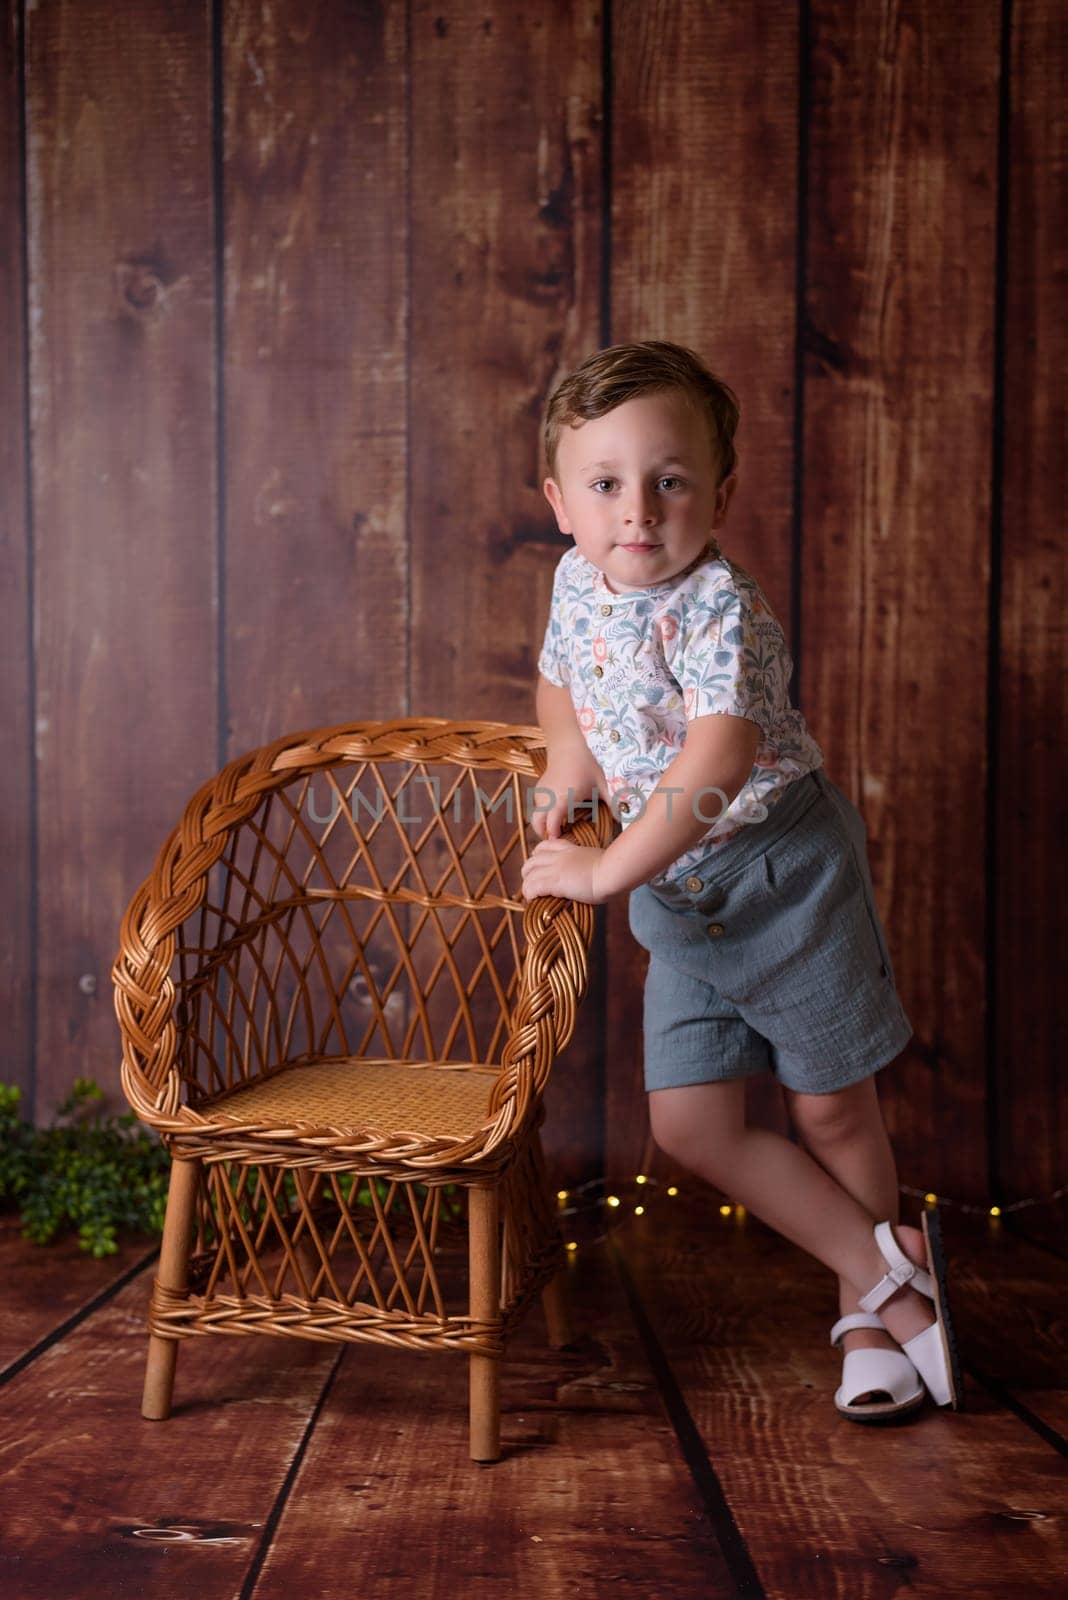 Portrait of sitting boy, isolated on wooden background by jcdiazhidalgo